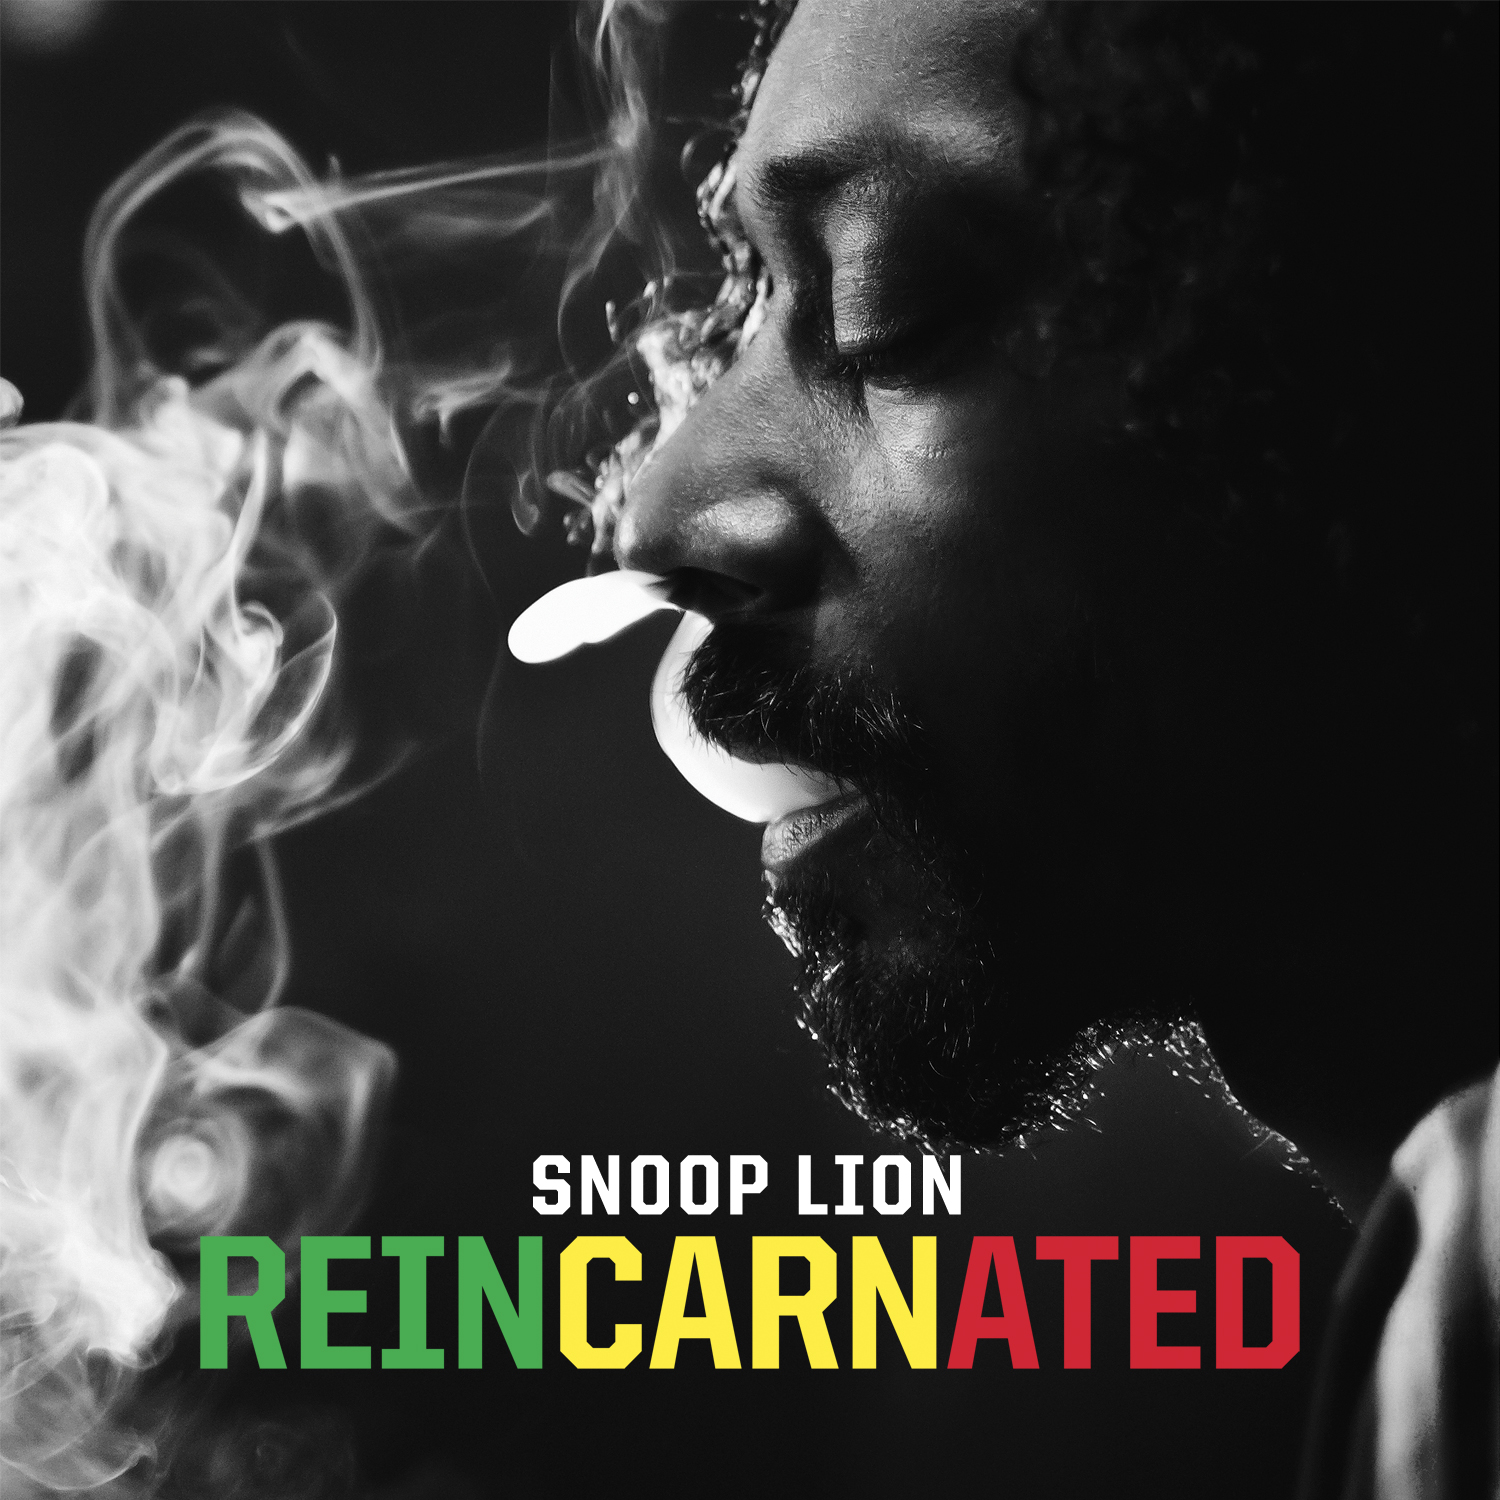 Snoop Lion - "Reincarnated"